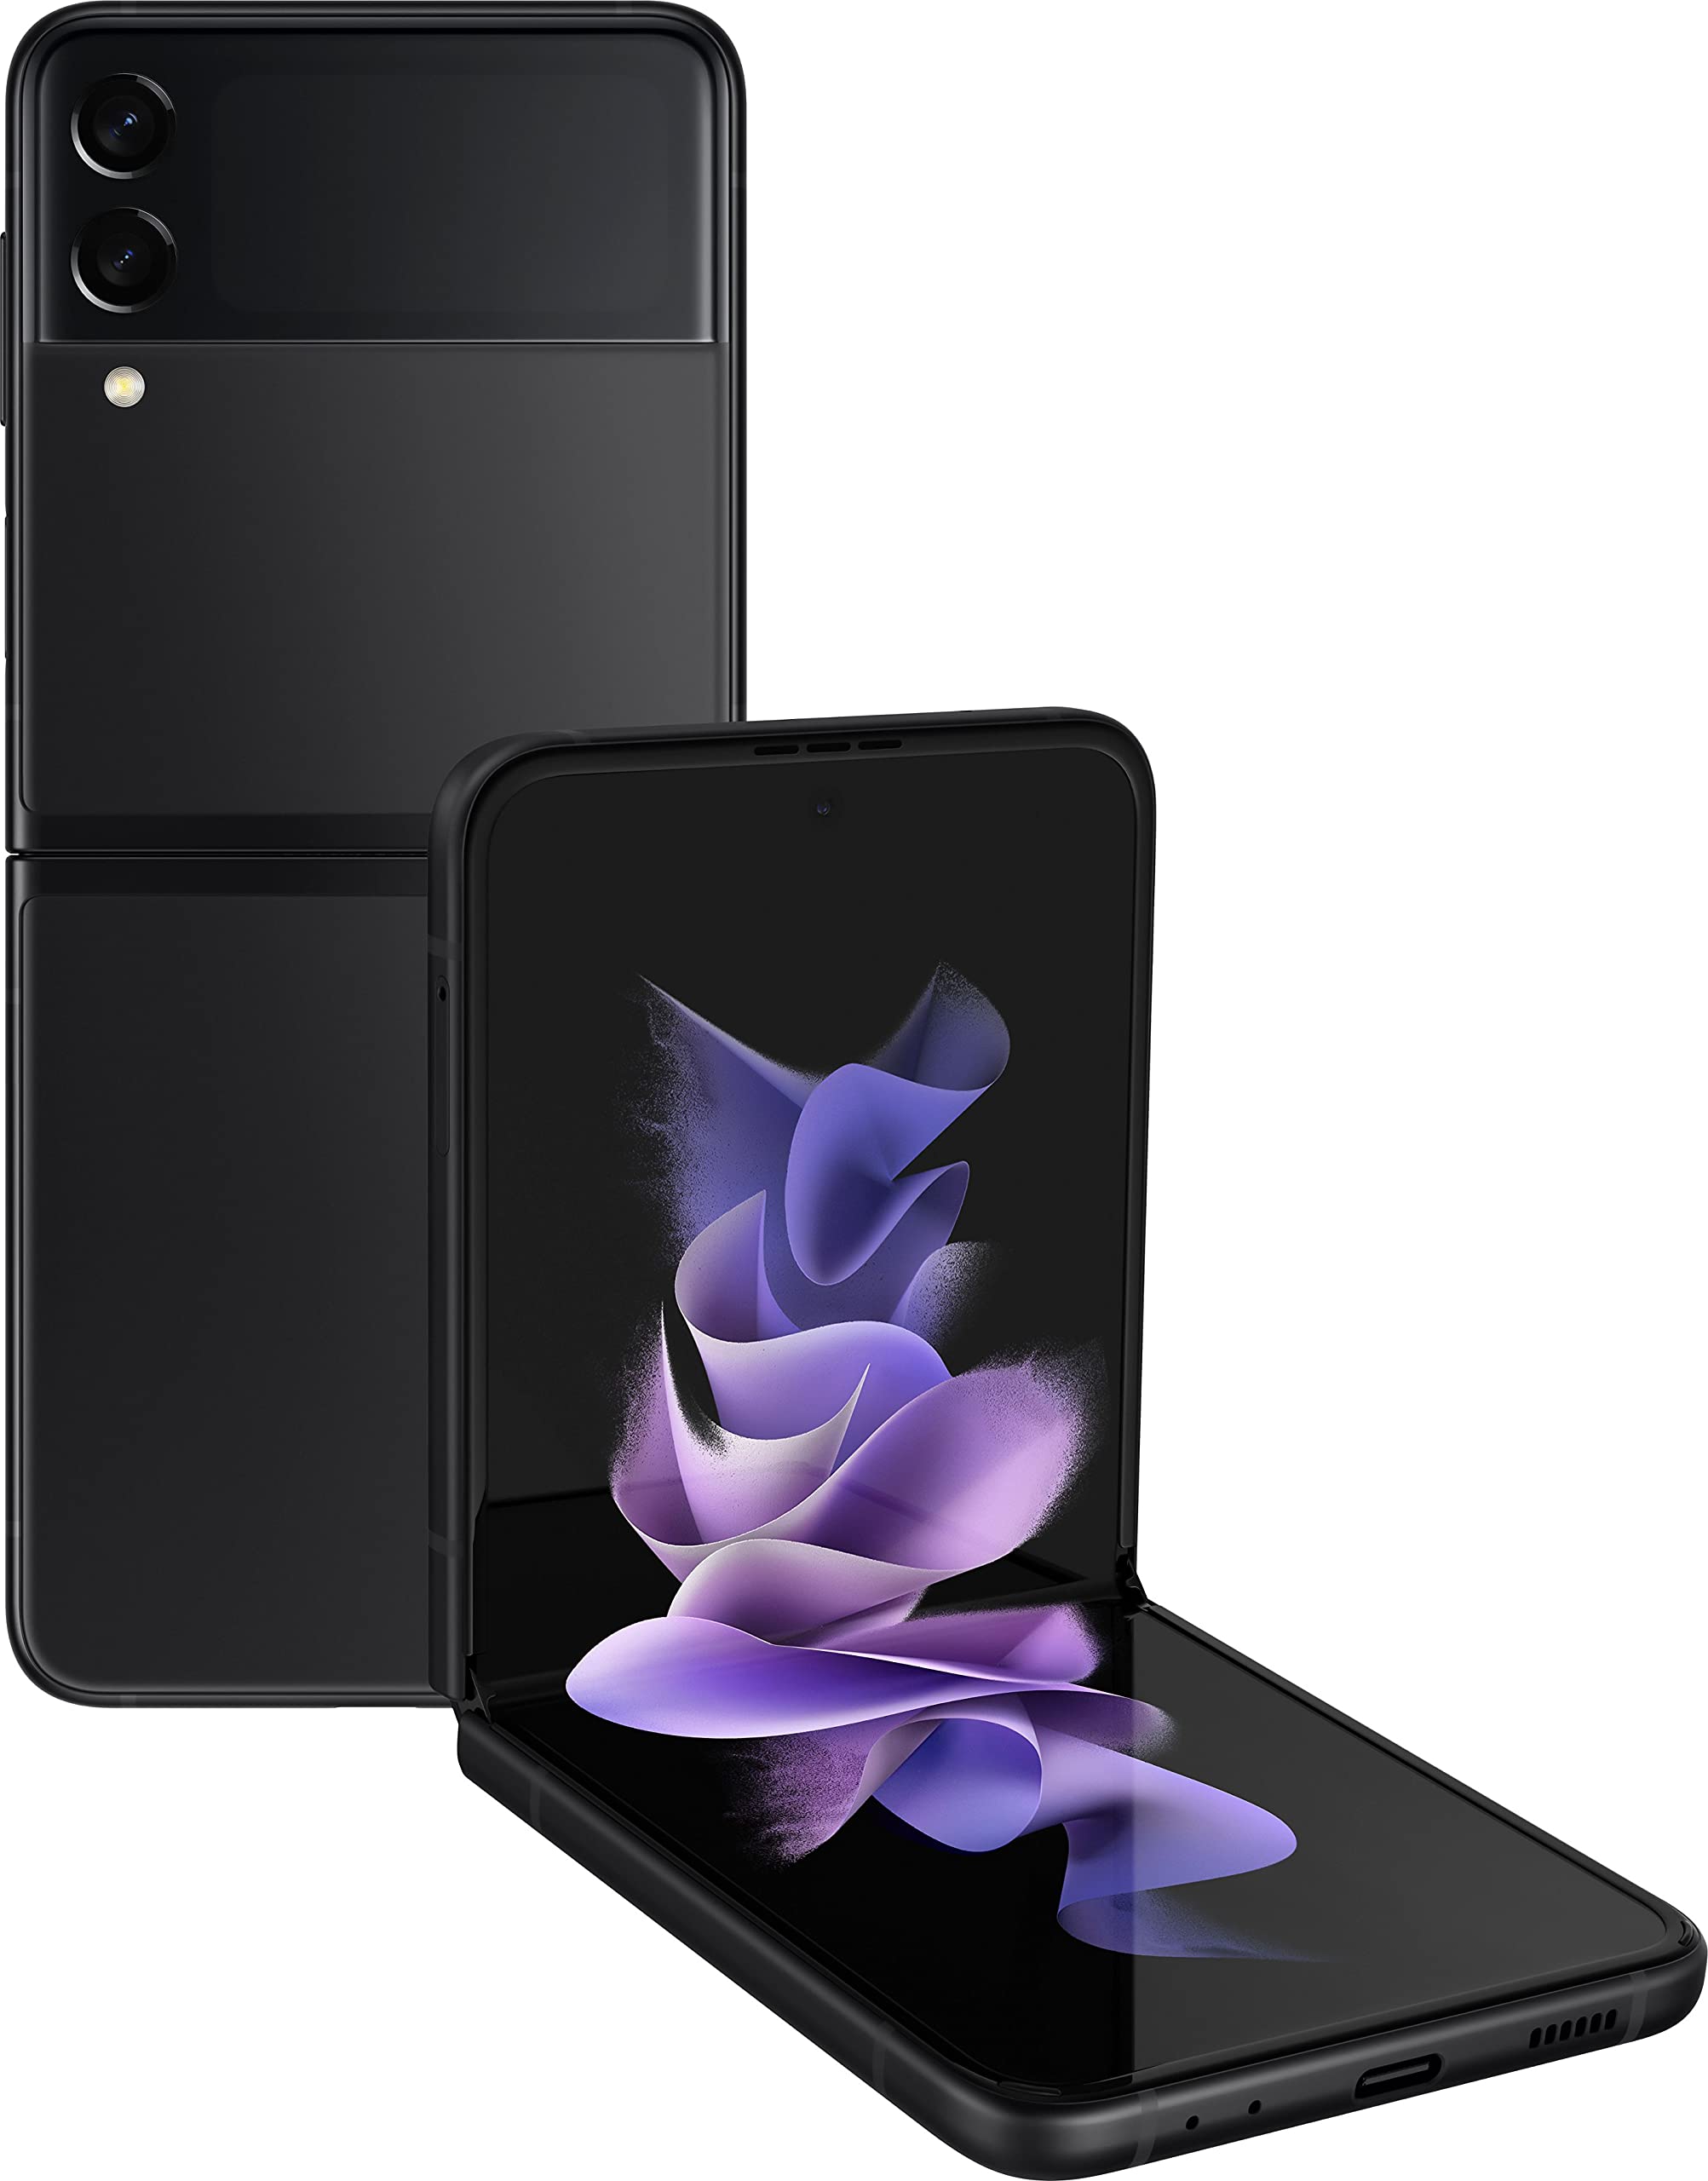 SAMSUNG Galaxy Z Flip 3 F7110 5G Single SIM 256GB 8GB RAM Factory Unlocked (GSM Only | No CDMA - not Compatible with Verizon/Sprint) International Version – Black